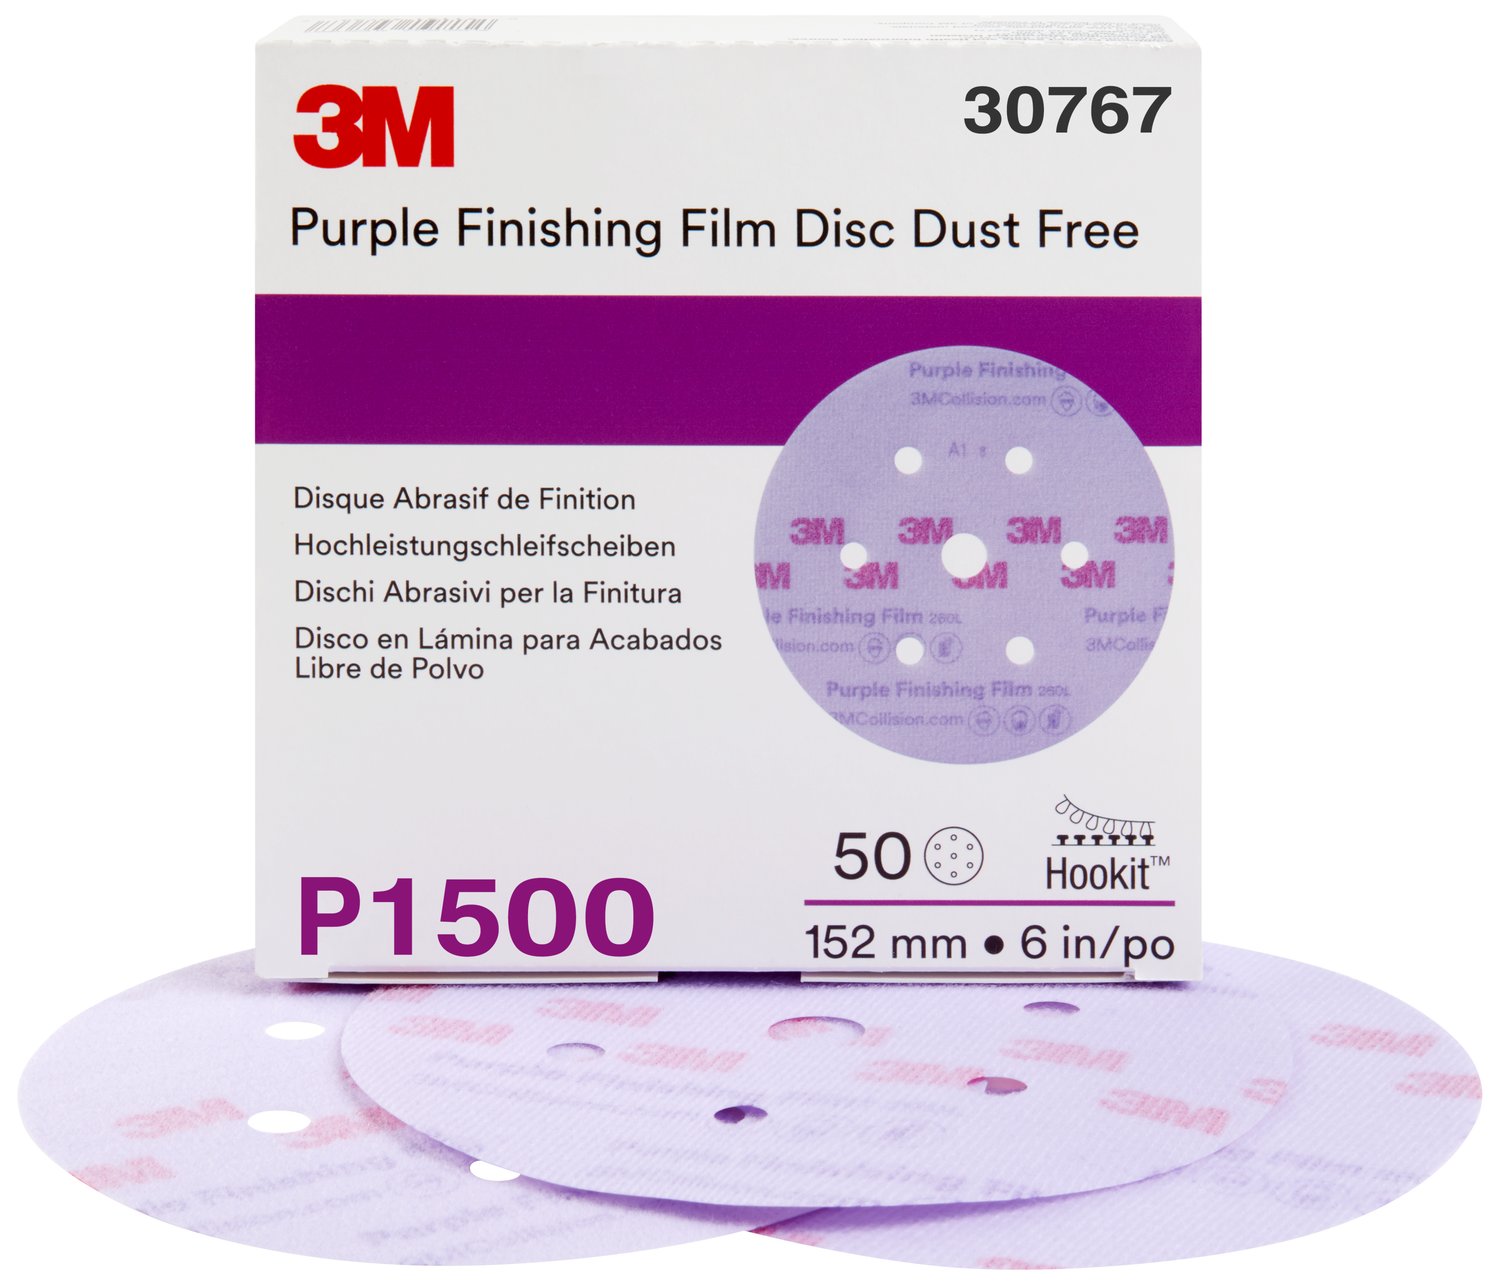 7100122779 - 3M Hookit Purple Finishing Film Abrasive Disc 260L, 30767, 6 in, Dust
Free, P1500, 50 discs per carton, 4 cartons per case